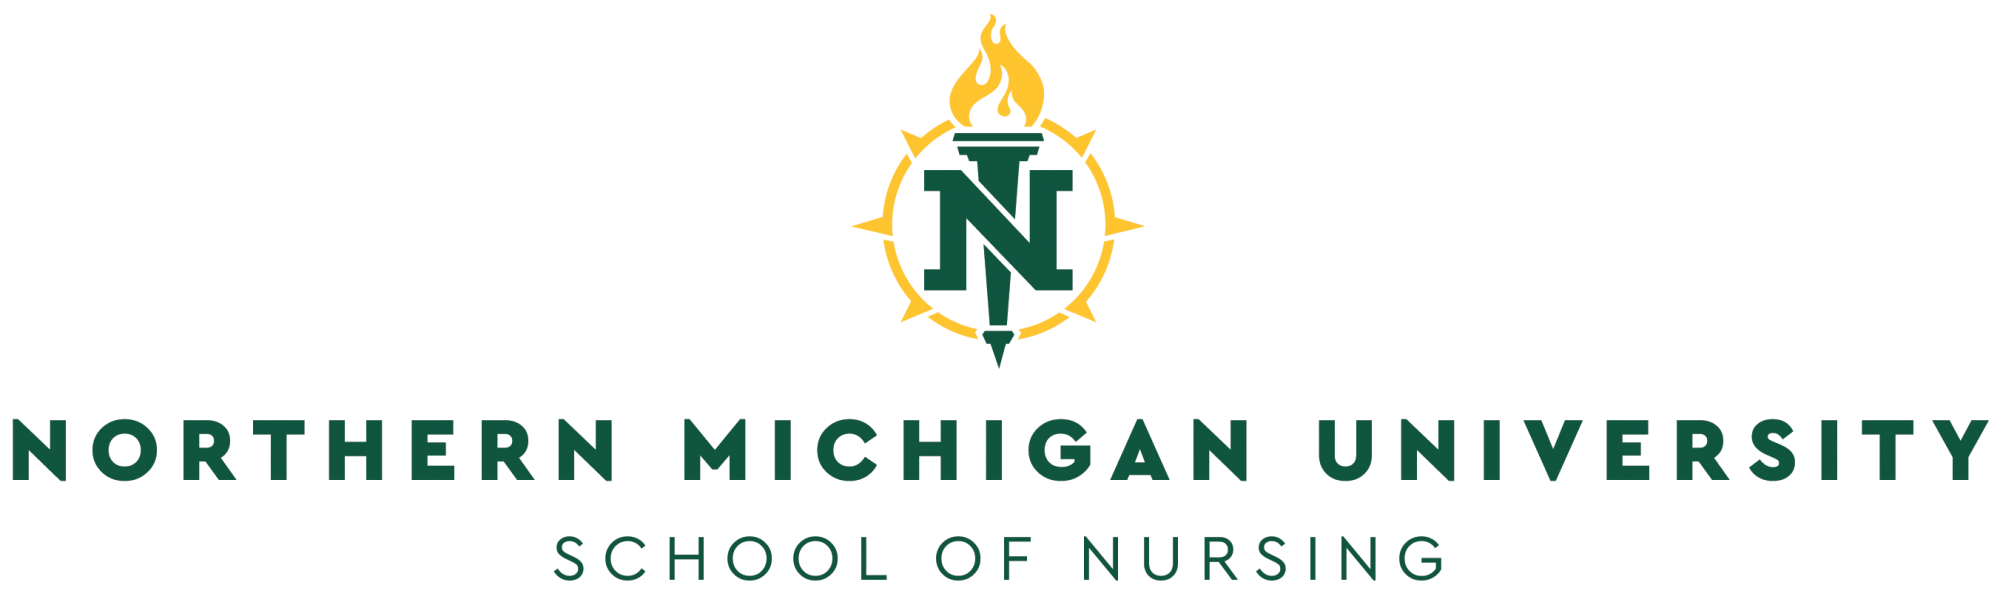 NMU Nursing School Logo